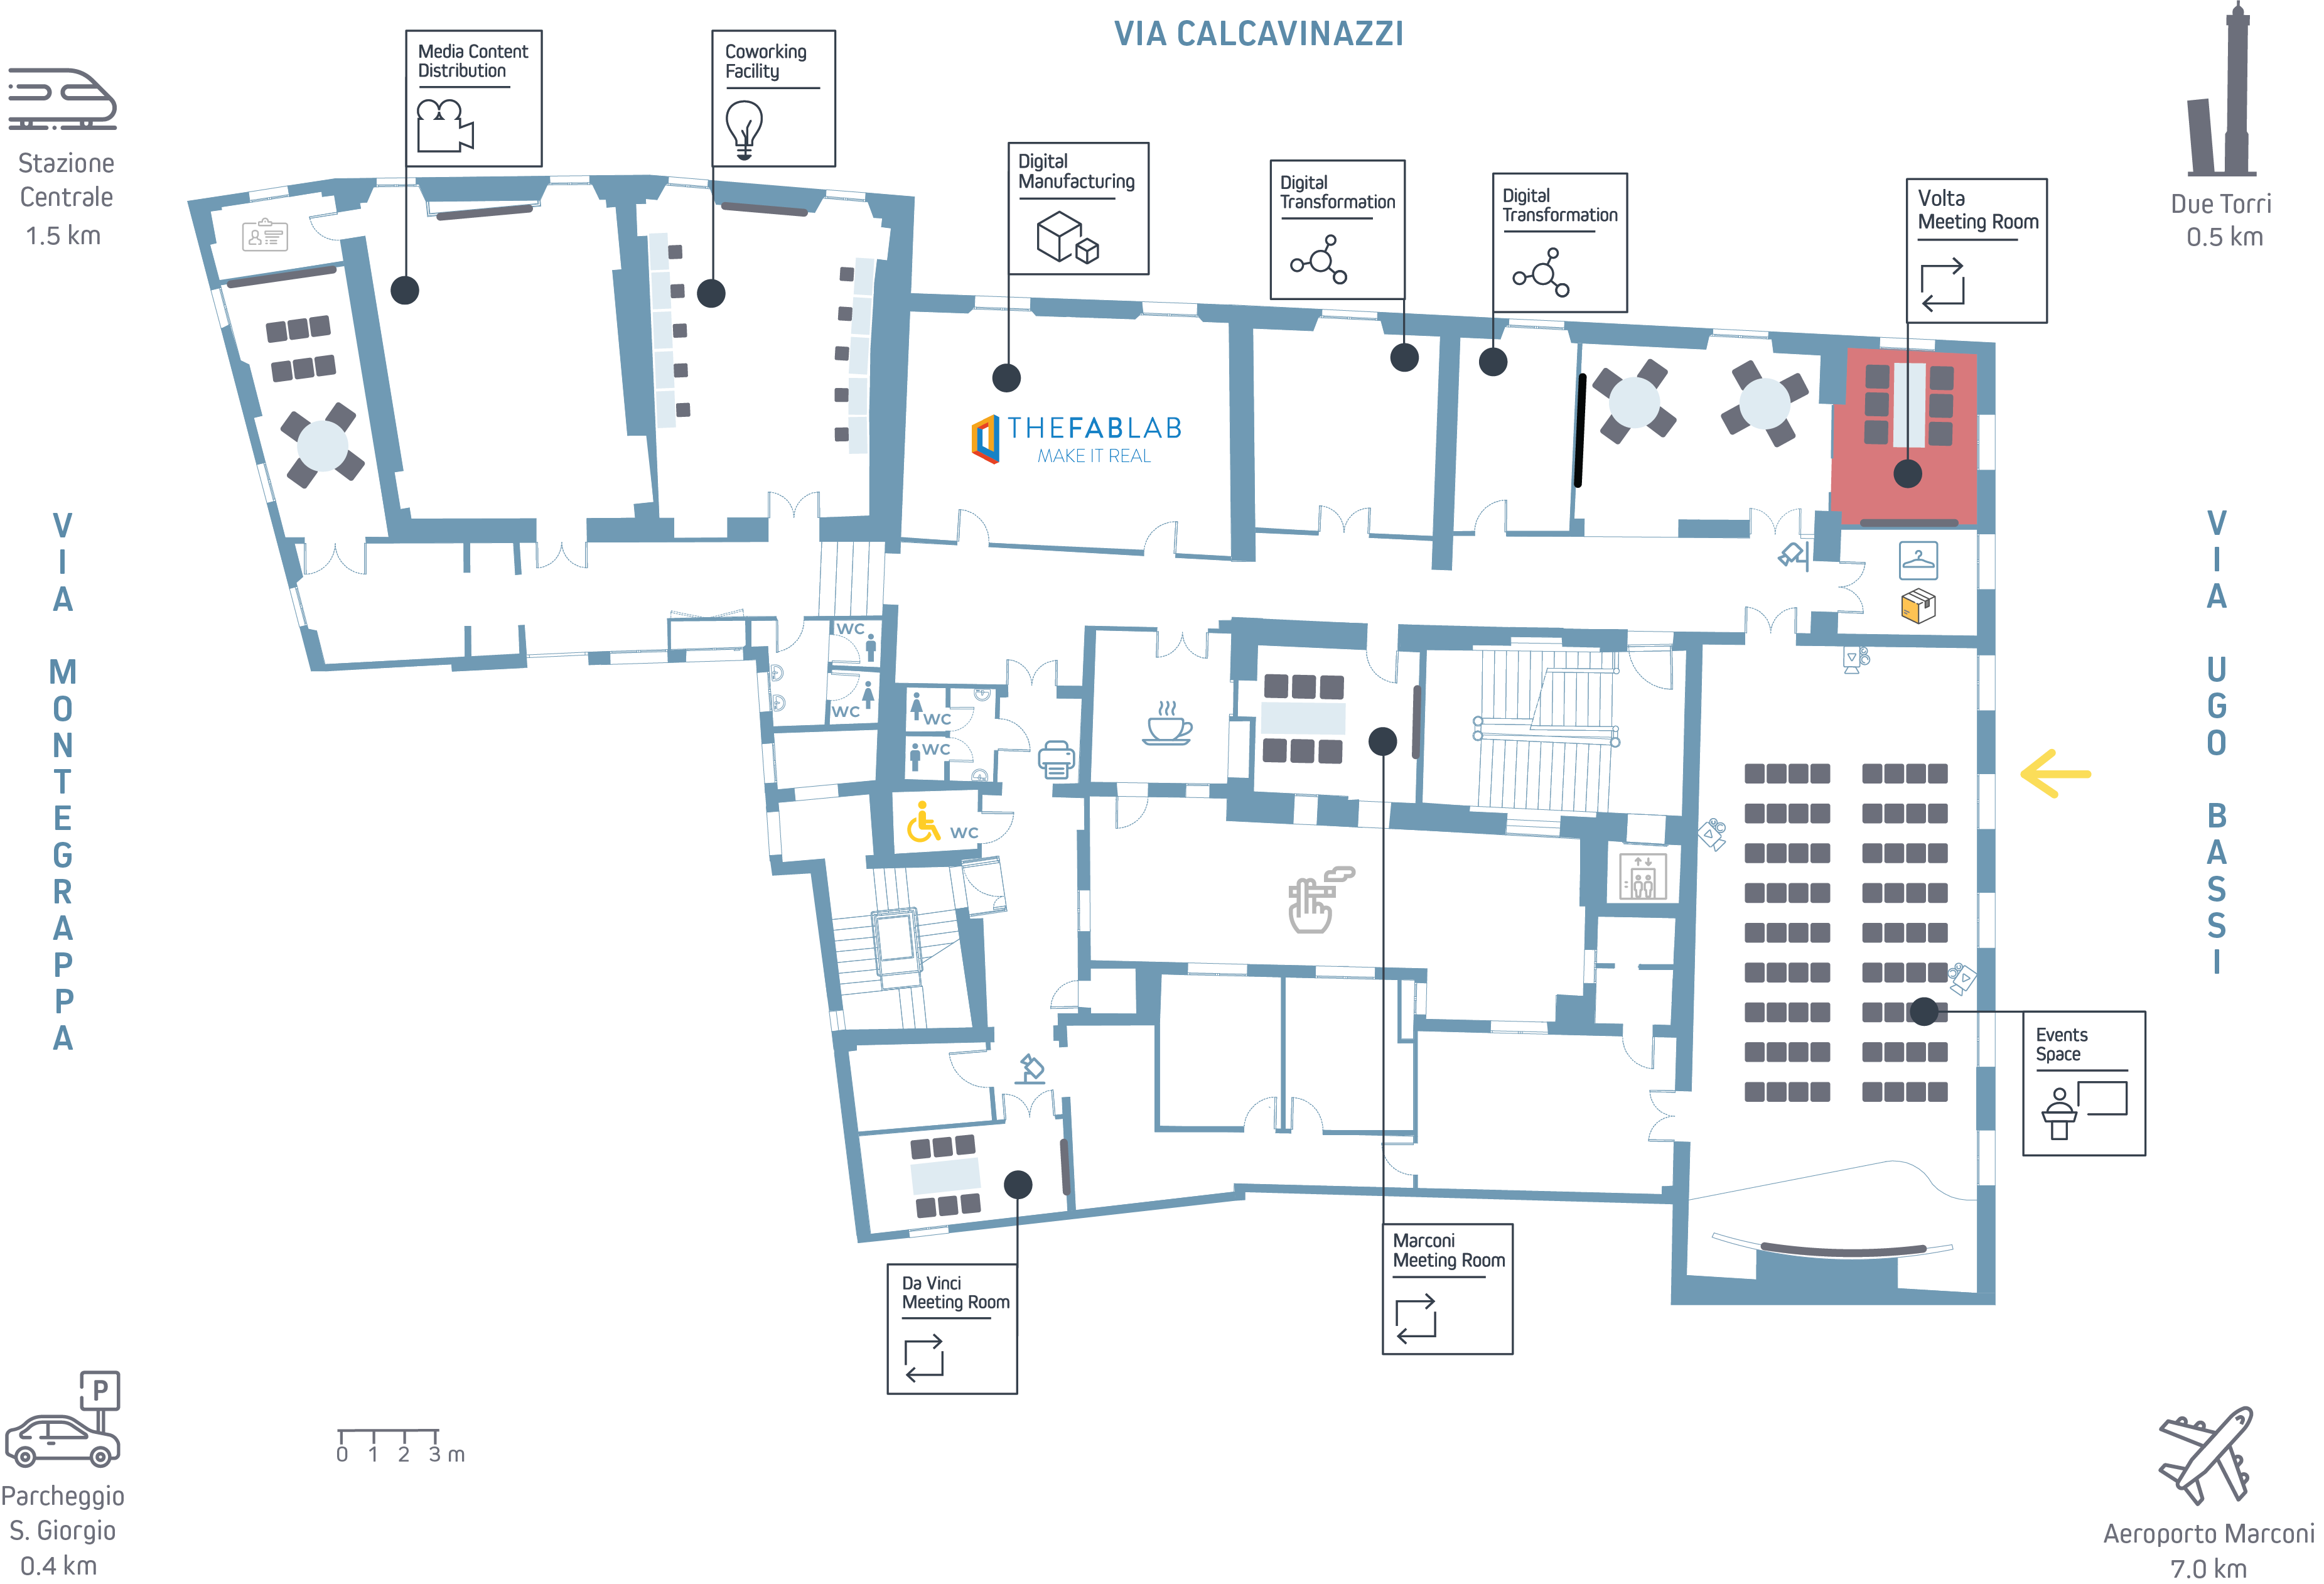 Net-Service-Digital-Hub-Floor-Map-Volta-Meeting-Room